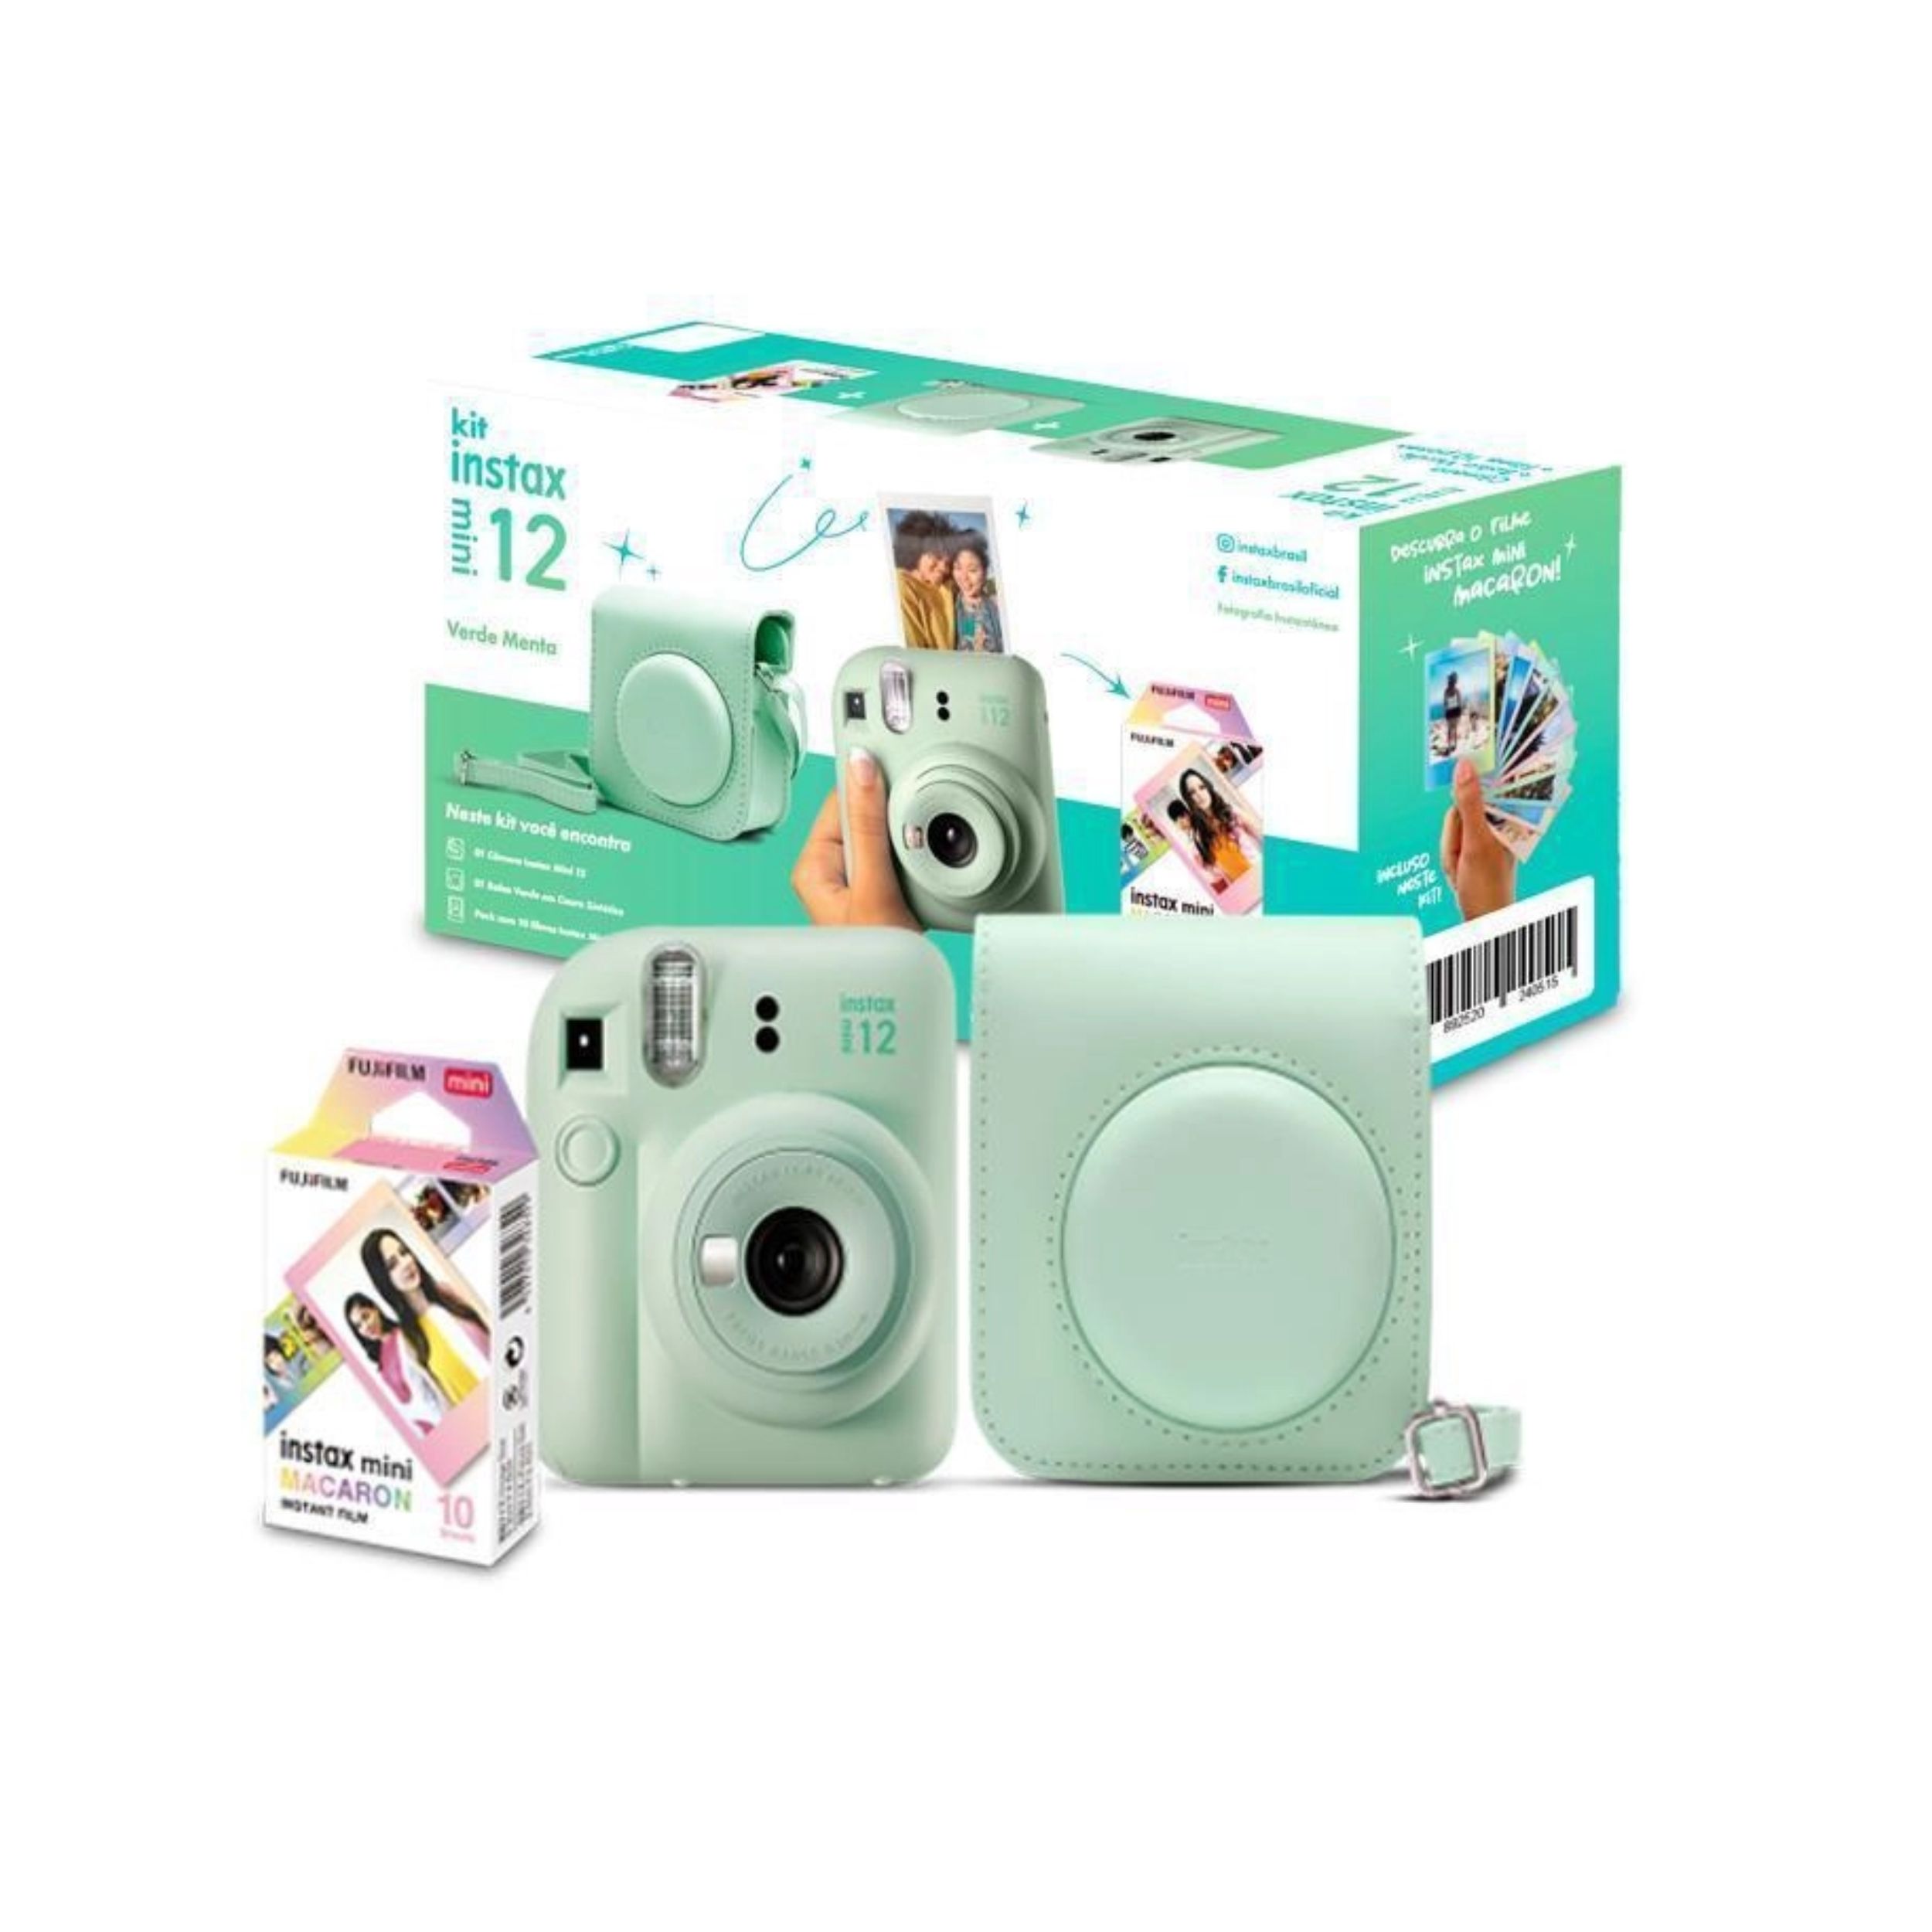 Fujifilm Instax mini 12 Verde - Cámara instantánea - LDLC